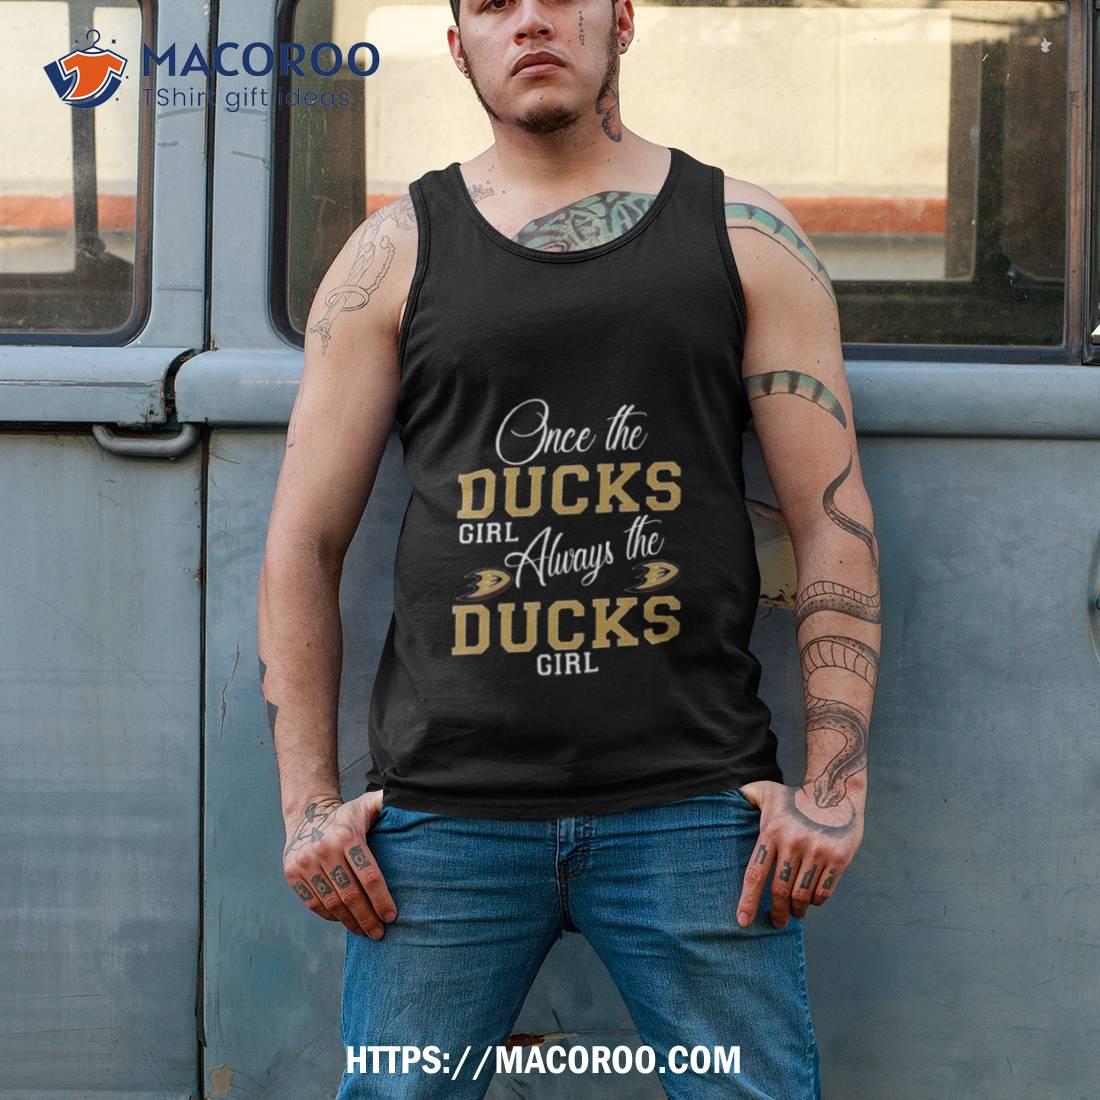 Ducks Jersey - Mighty Ducks - Tank Top